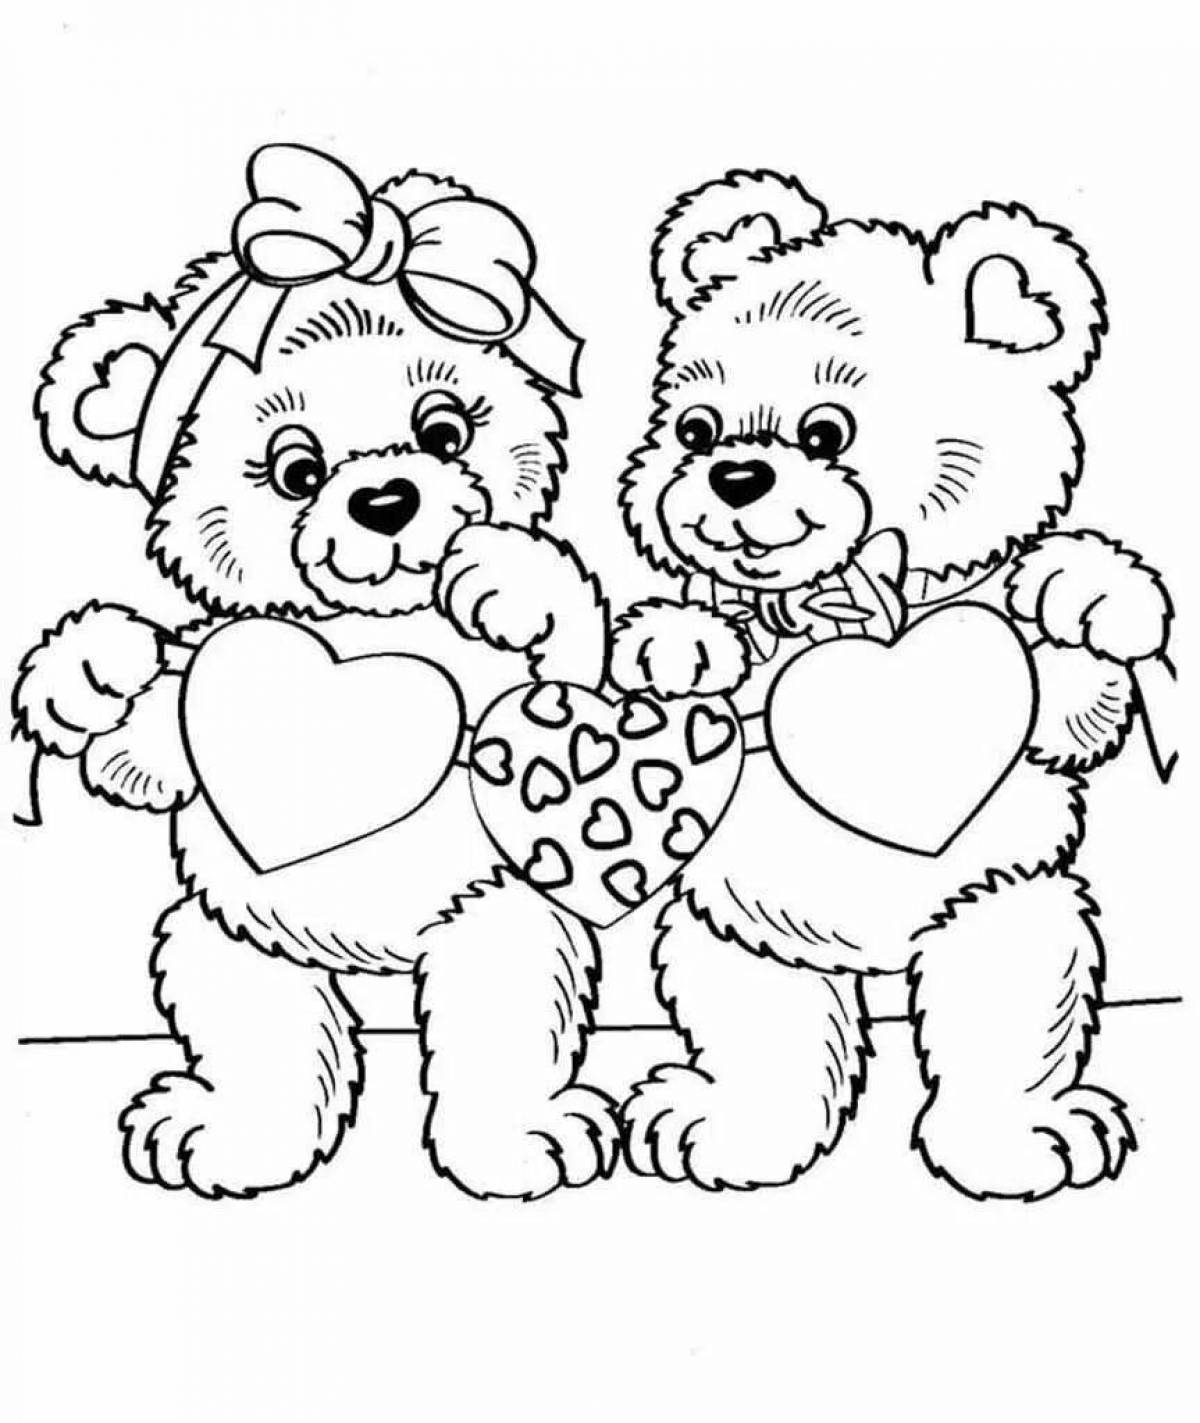 Play Teddy Bear with a Heart Online